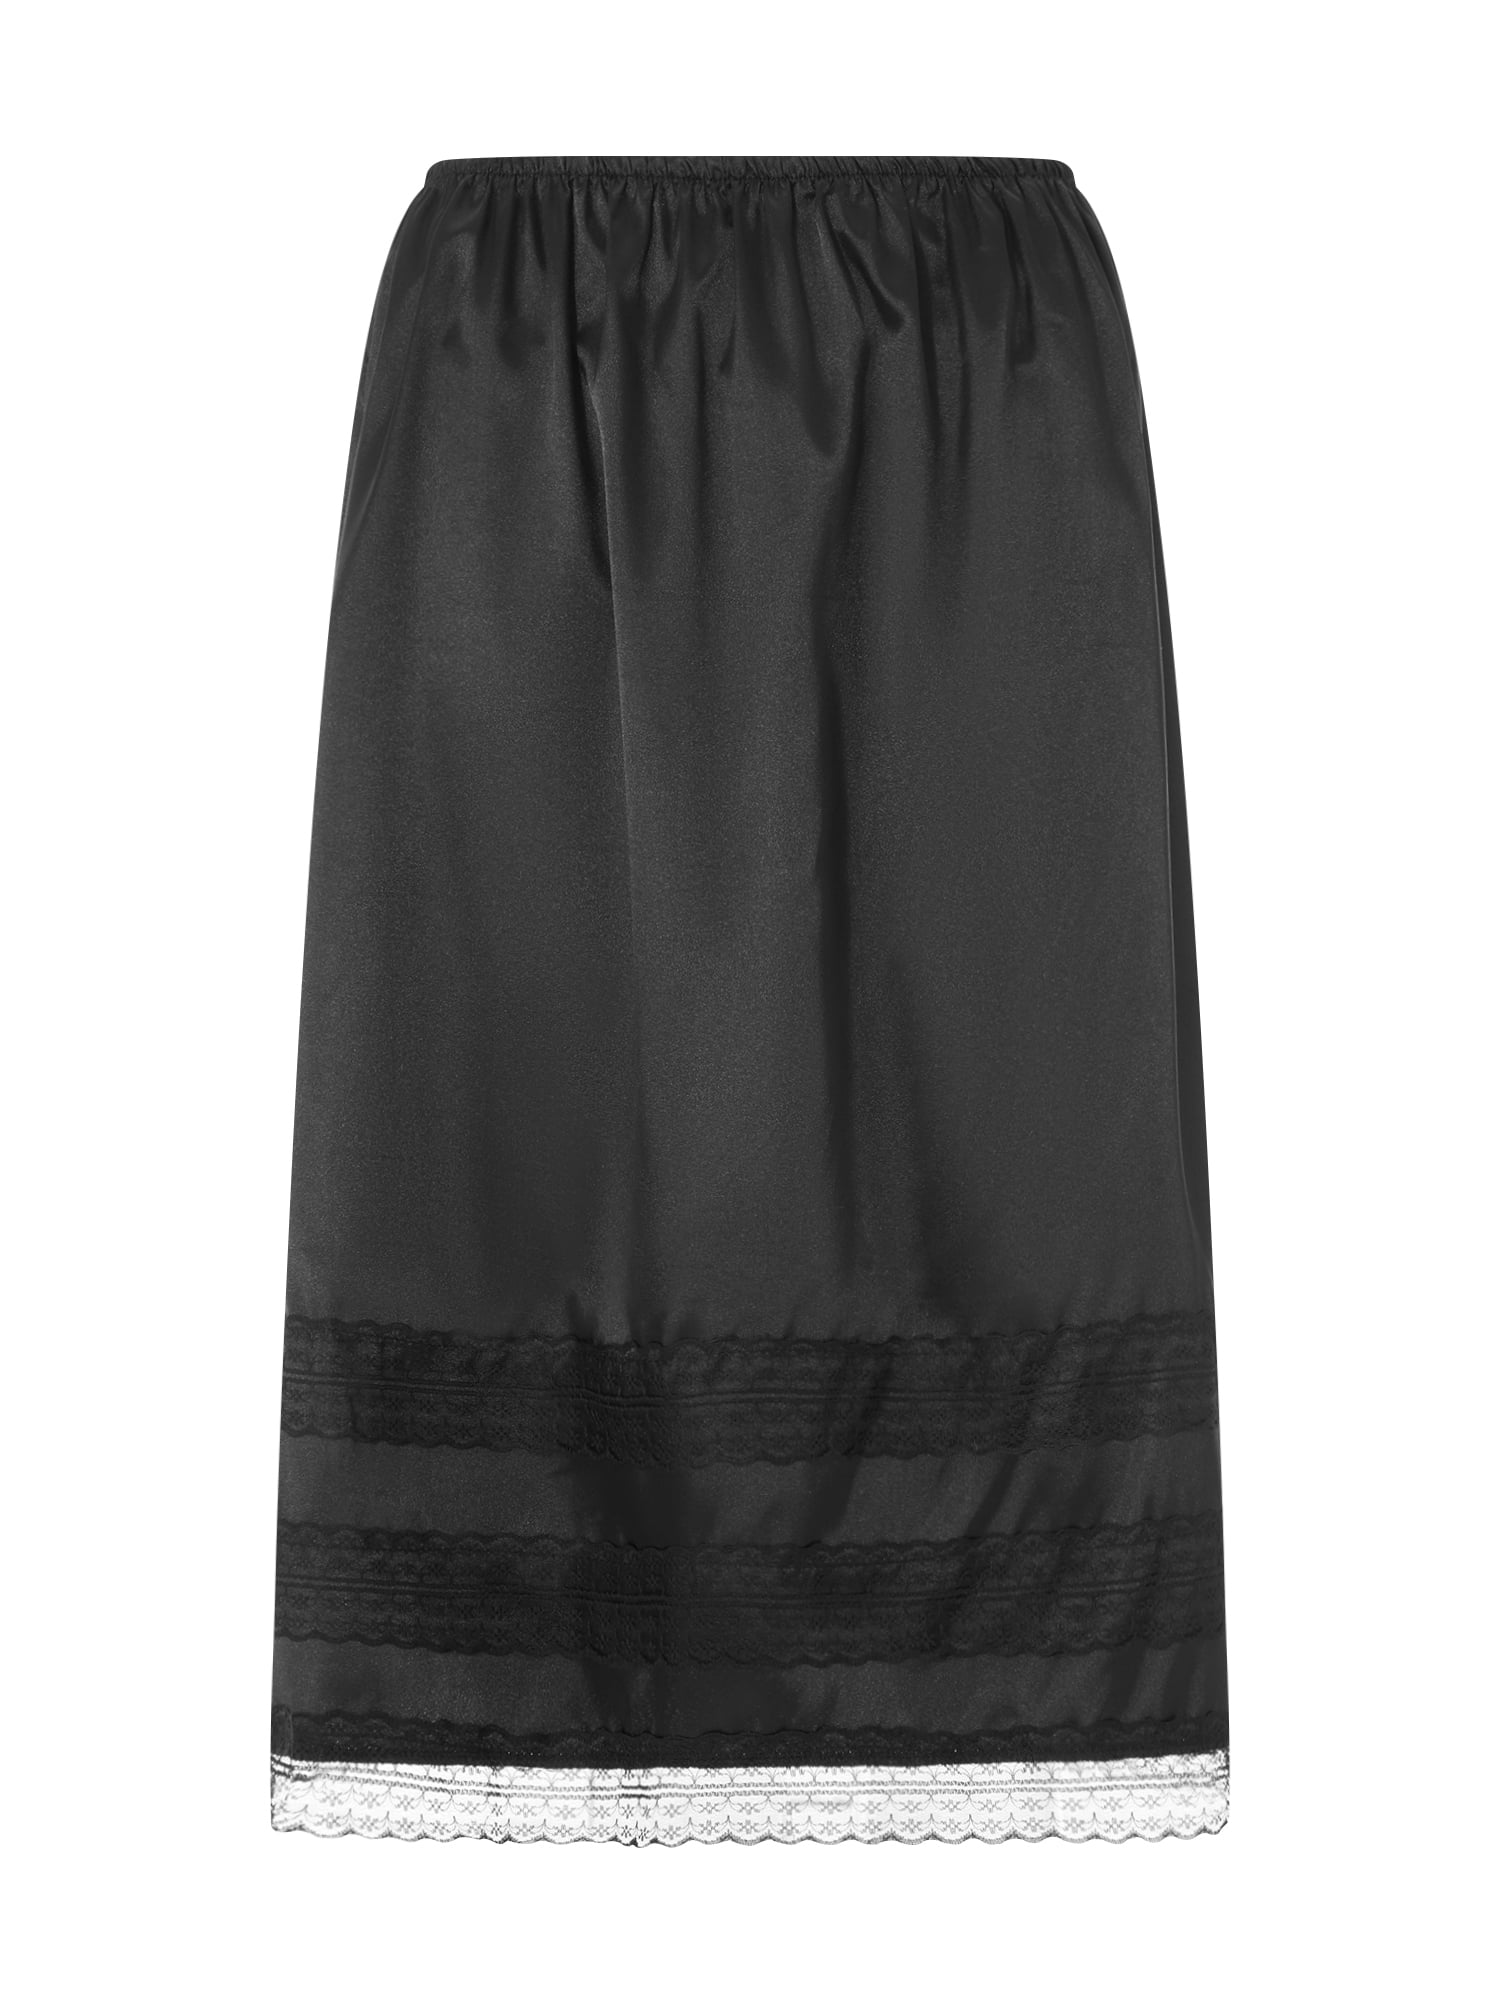 Hnyenmcko Satin Half Slips Skirt for Women Elastic Waist Lace Trim Long ...